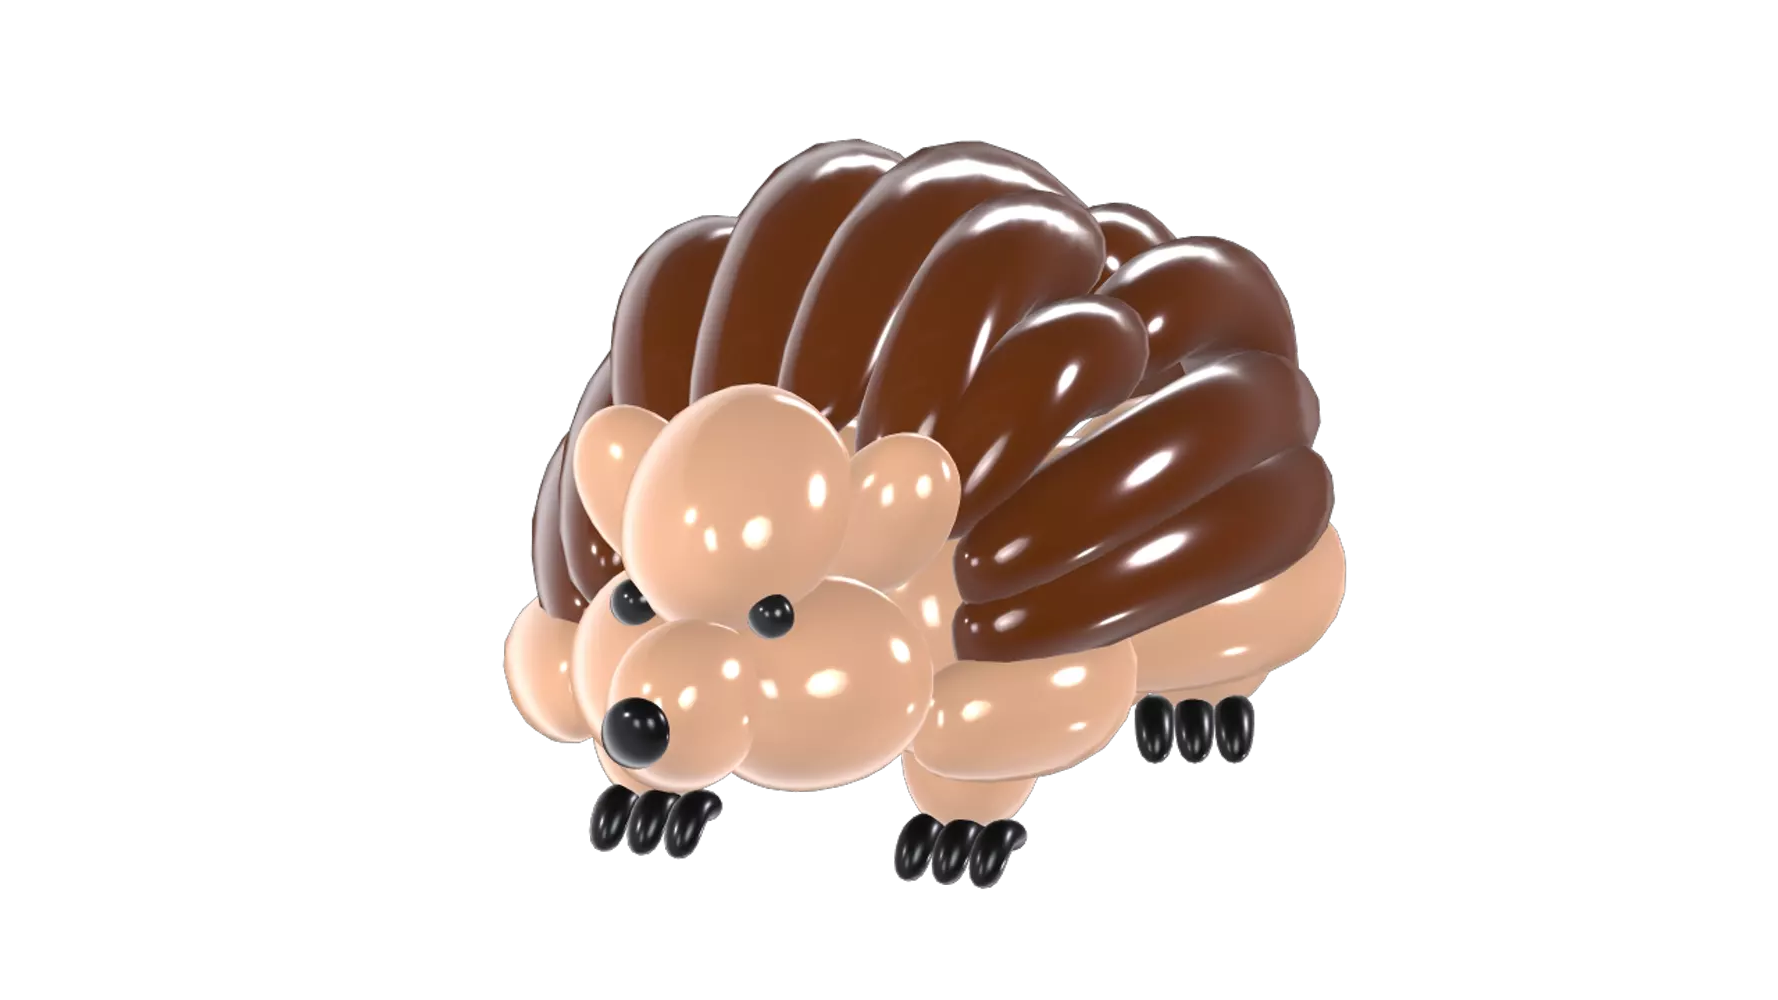 Hedgehog Balloon 3D Graphic